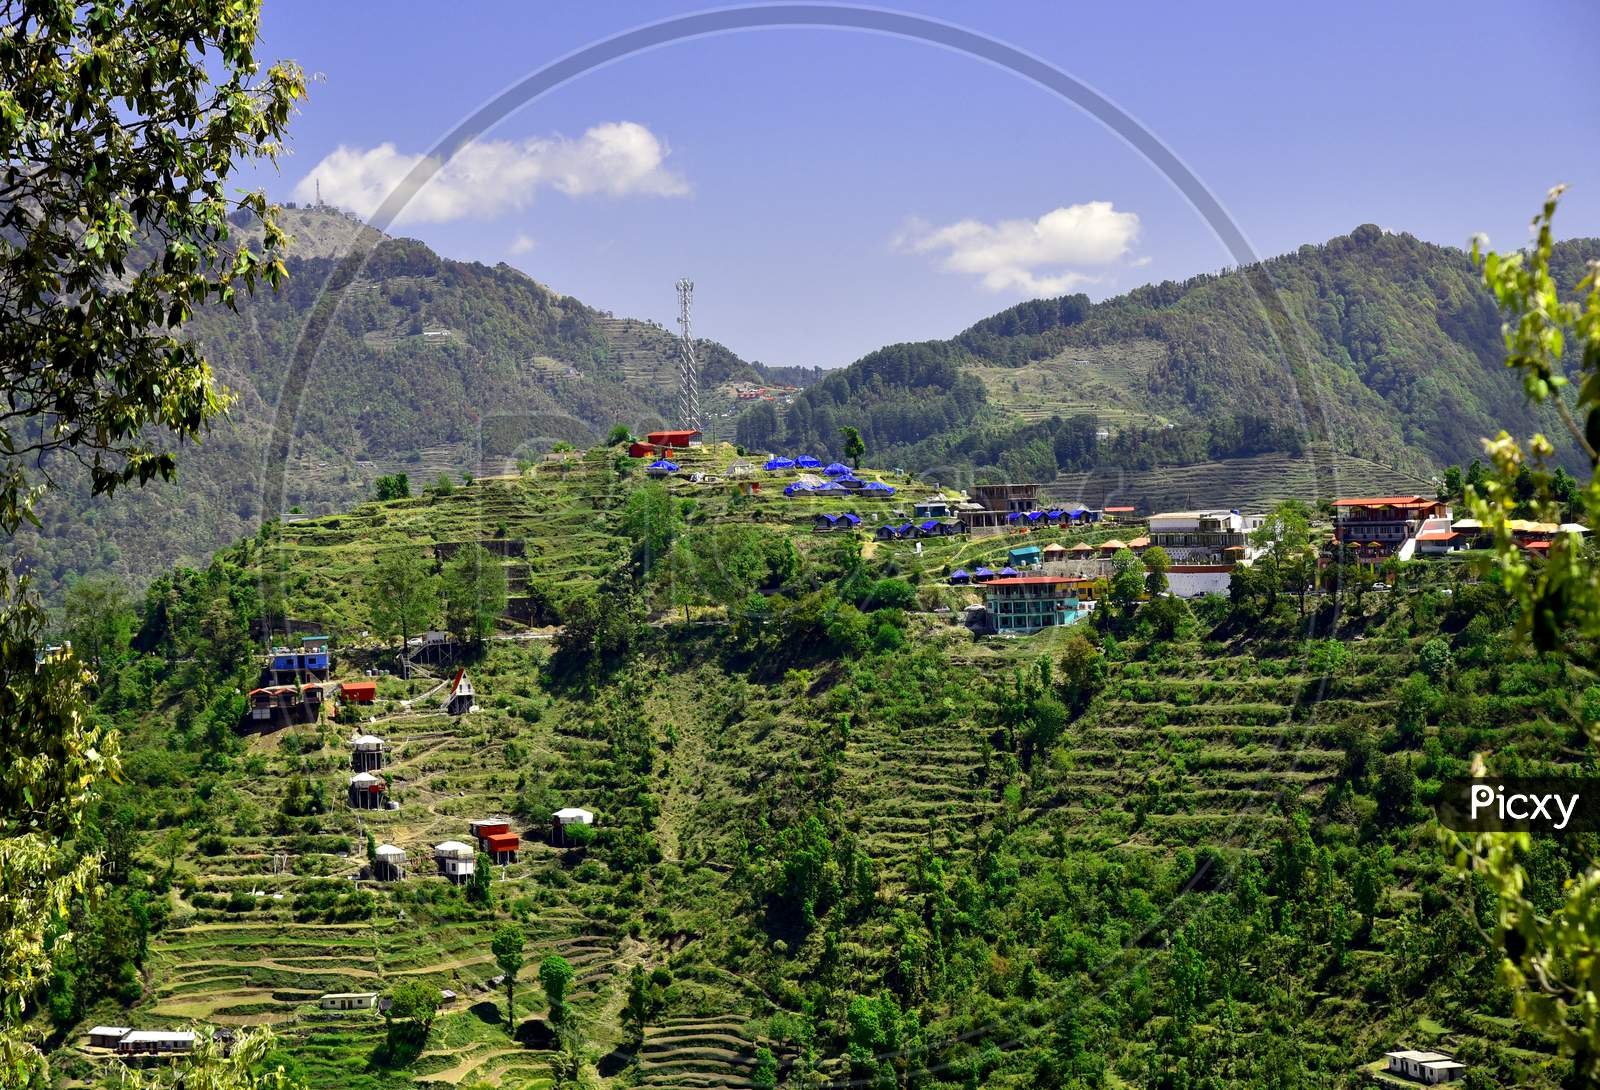 Stepwise Cultivation in Terrains of Dhanaulti , Uttarakhand